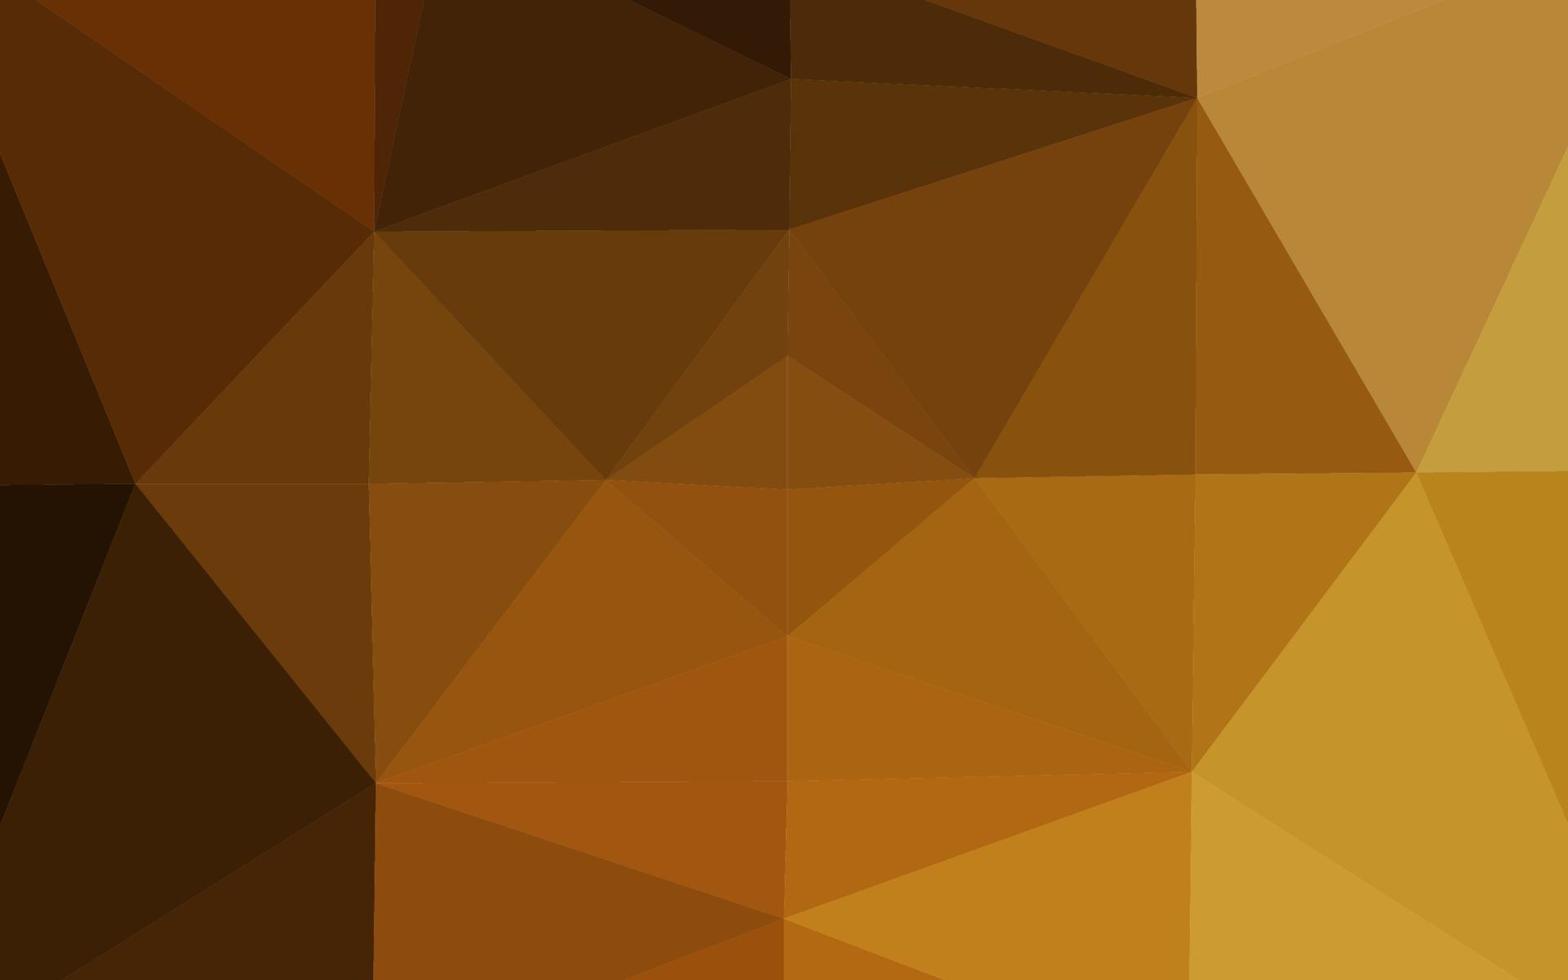 textura de triángulo borroso vector amarillo oscuro, naranja.